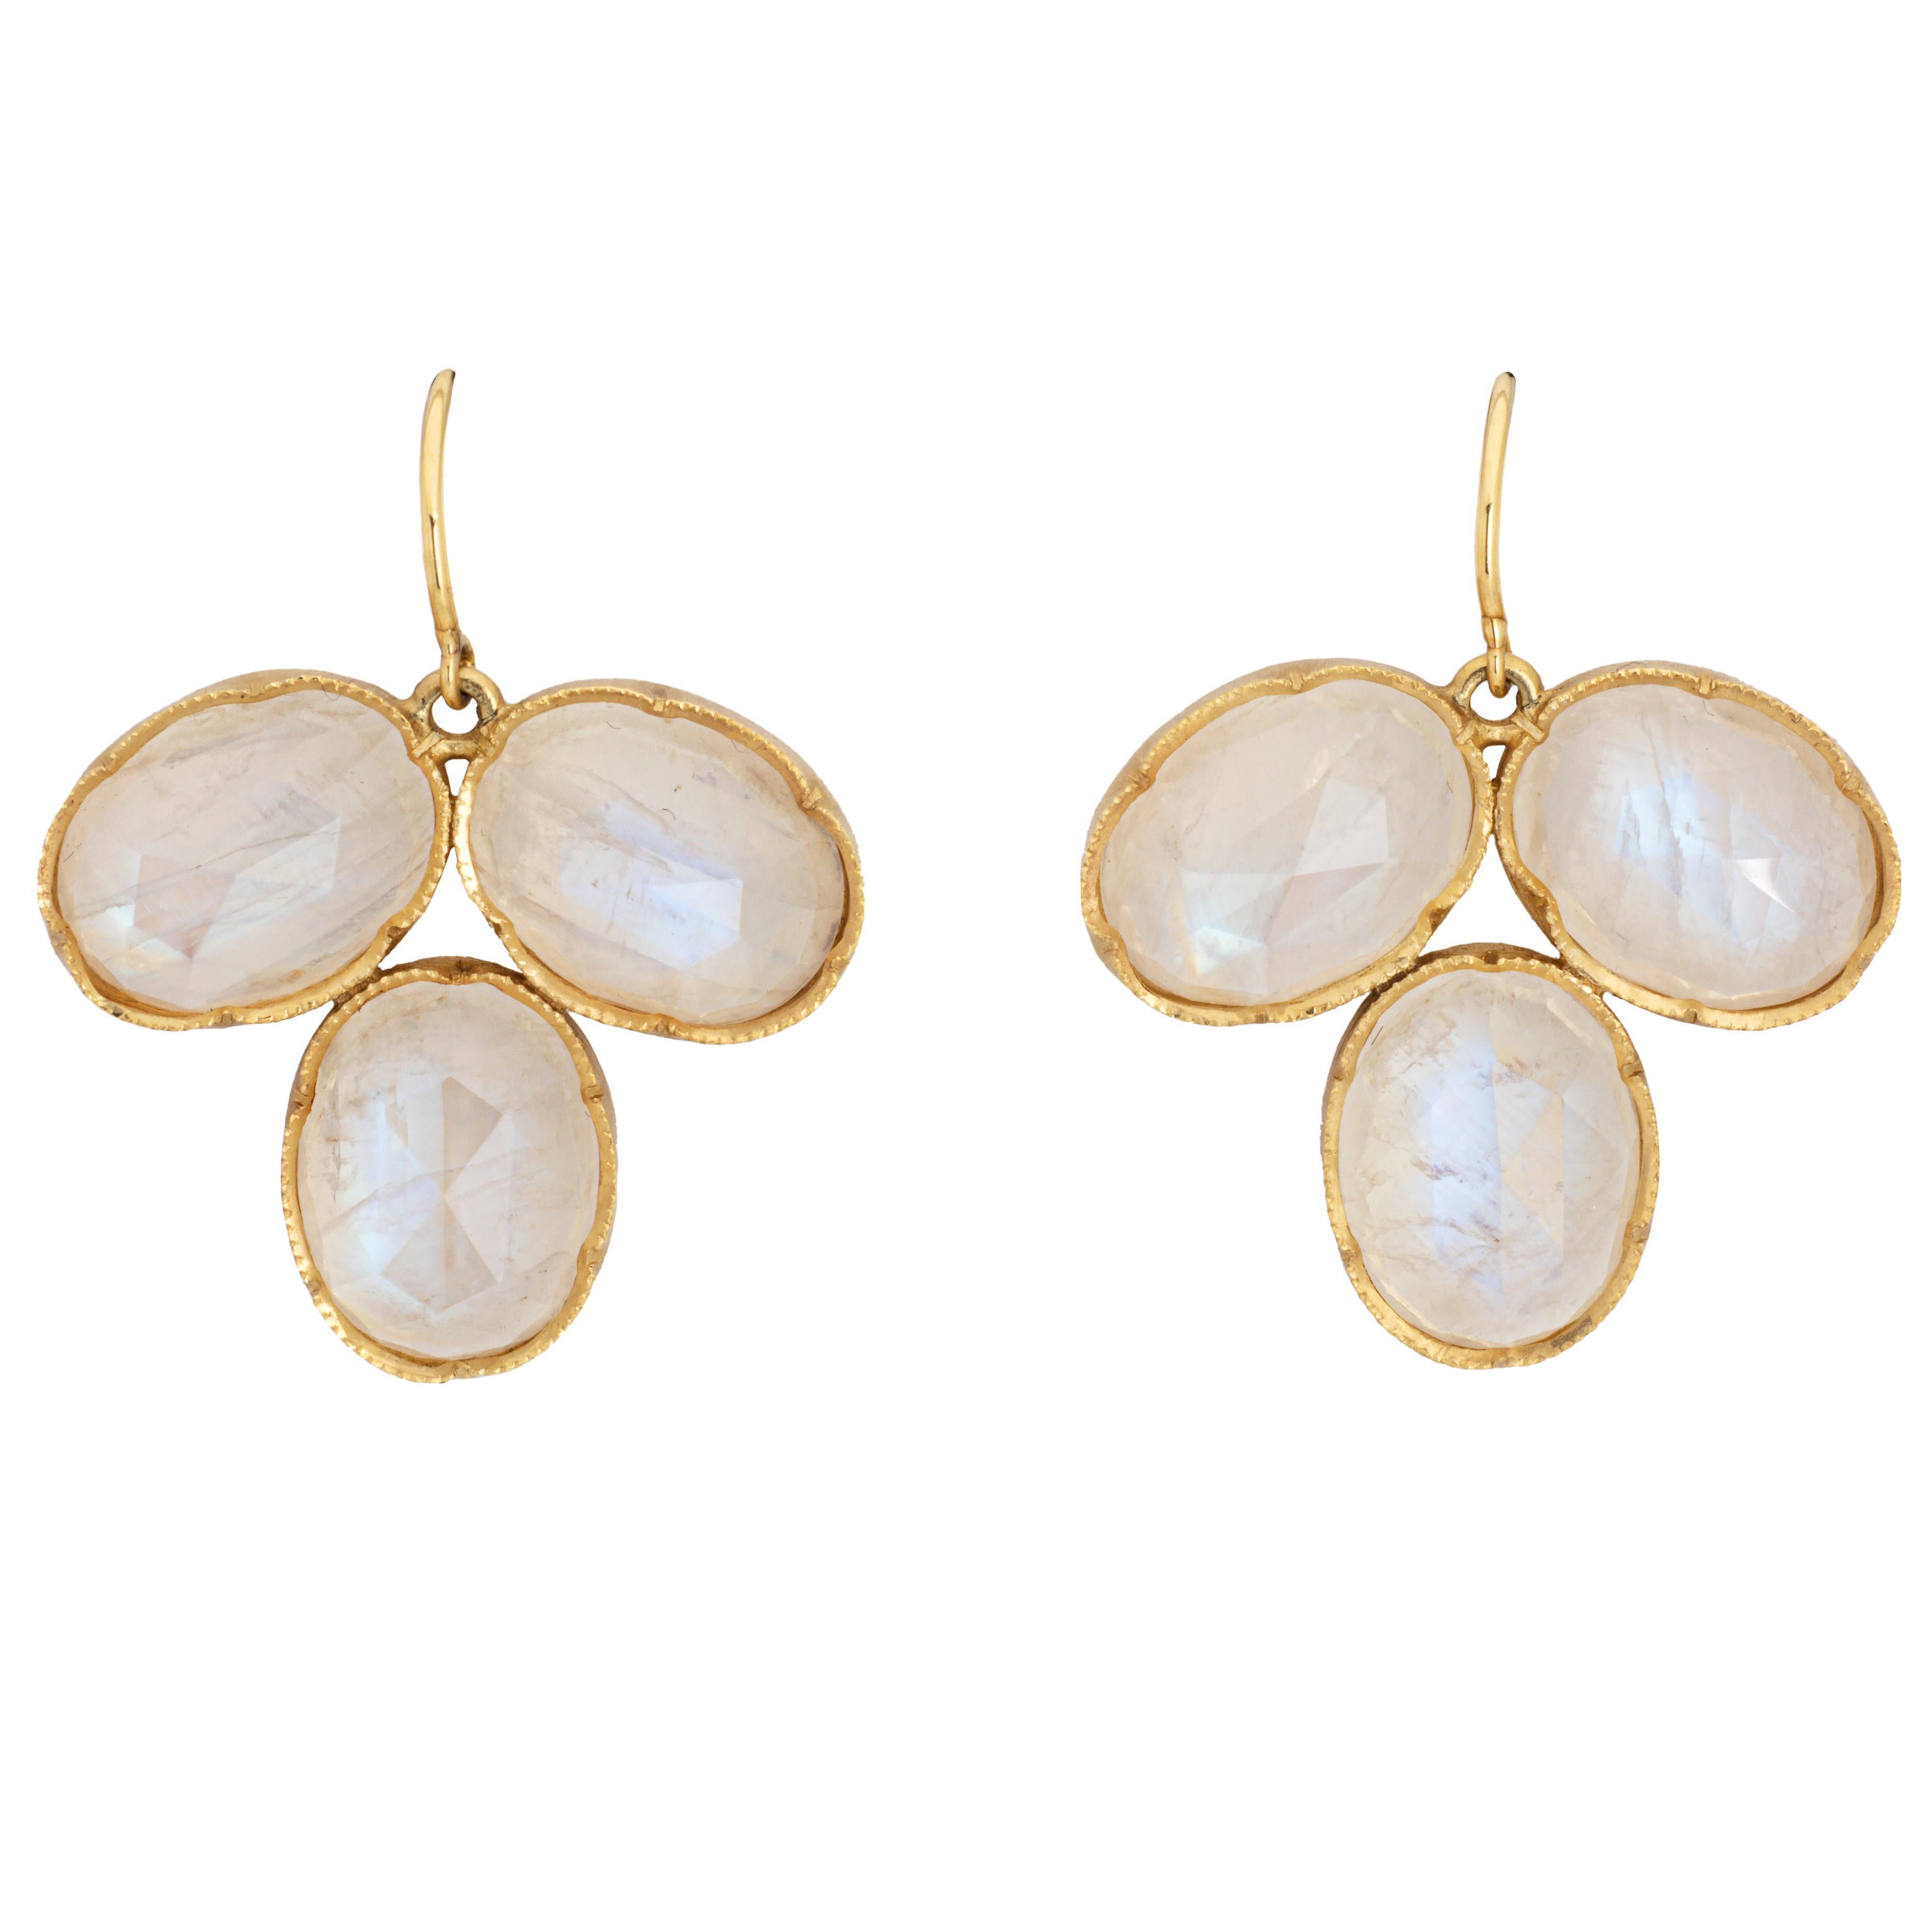 Irene Neuwirth Moonstone Earrings Estate 18k Gold 1" Drops Signed Fine Jewelry 